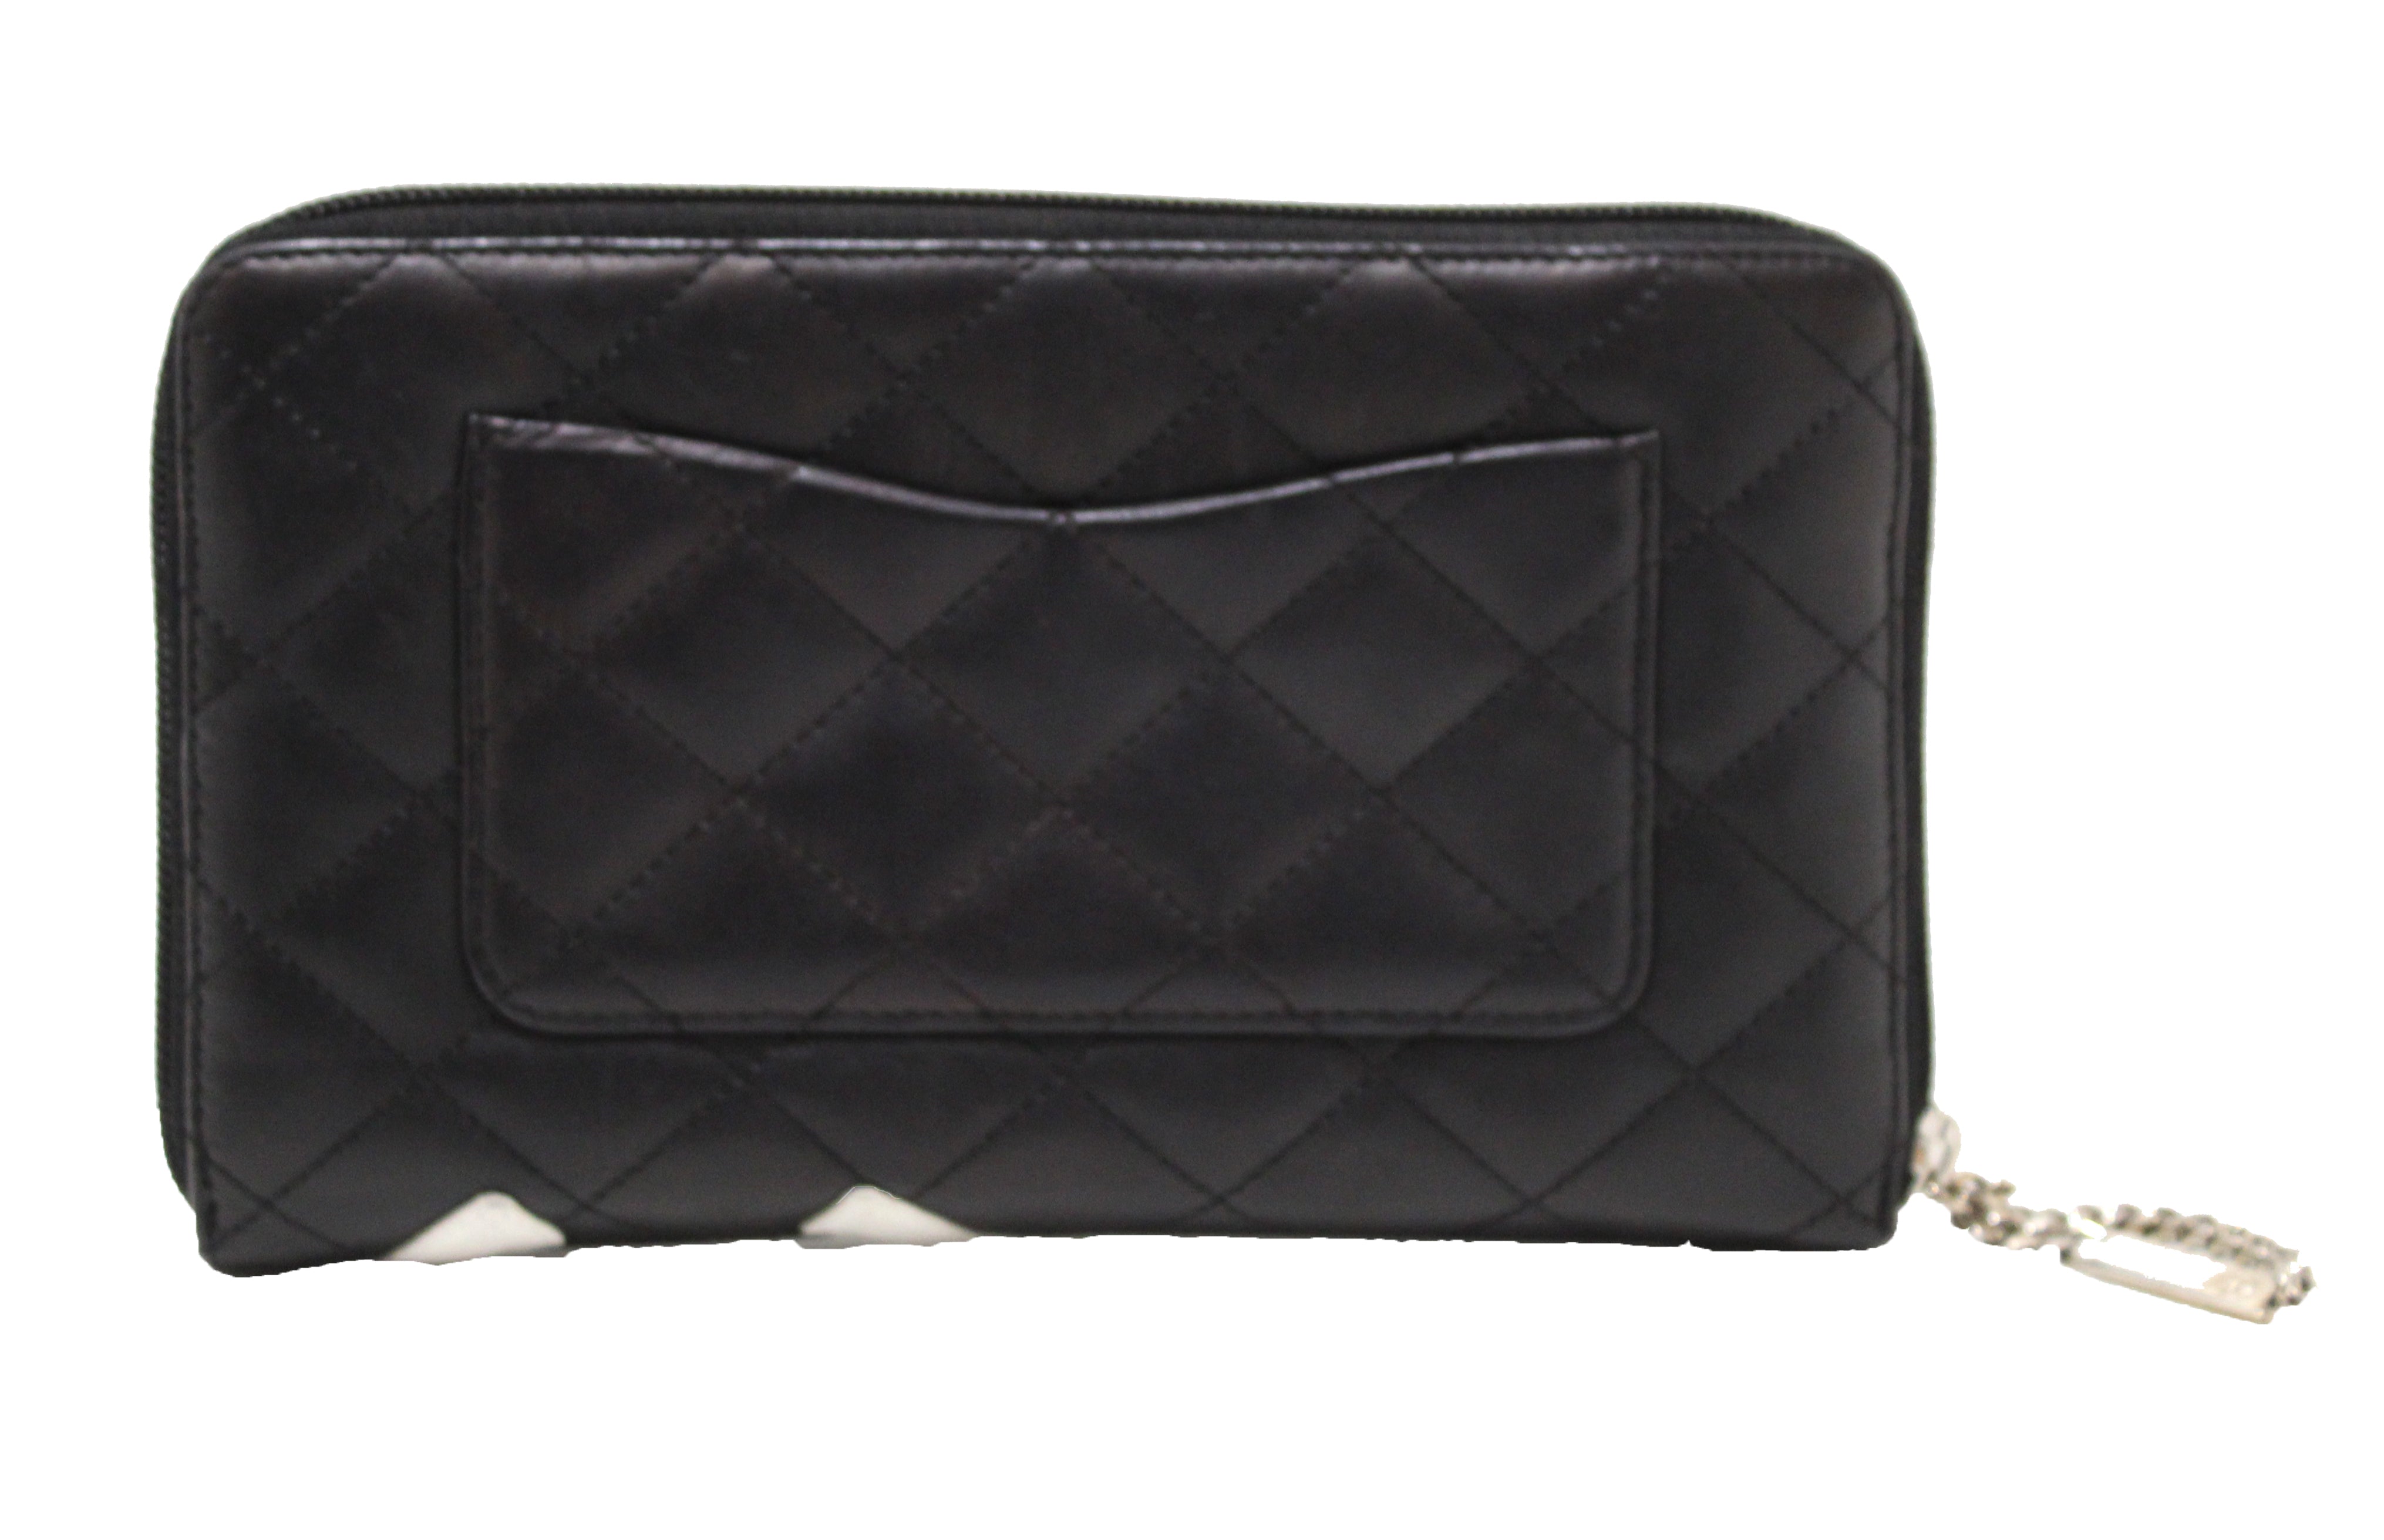 Authentic Chanel Black Calfskin Quilted Leather Cambon Zip Around Organizer Wallet